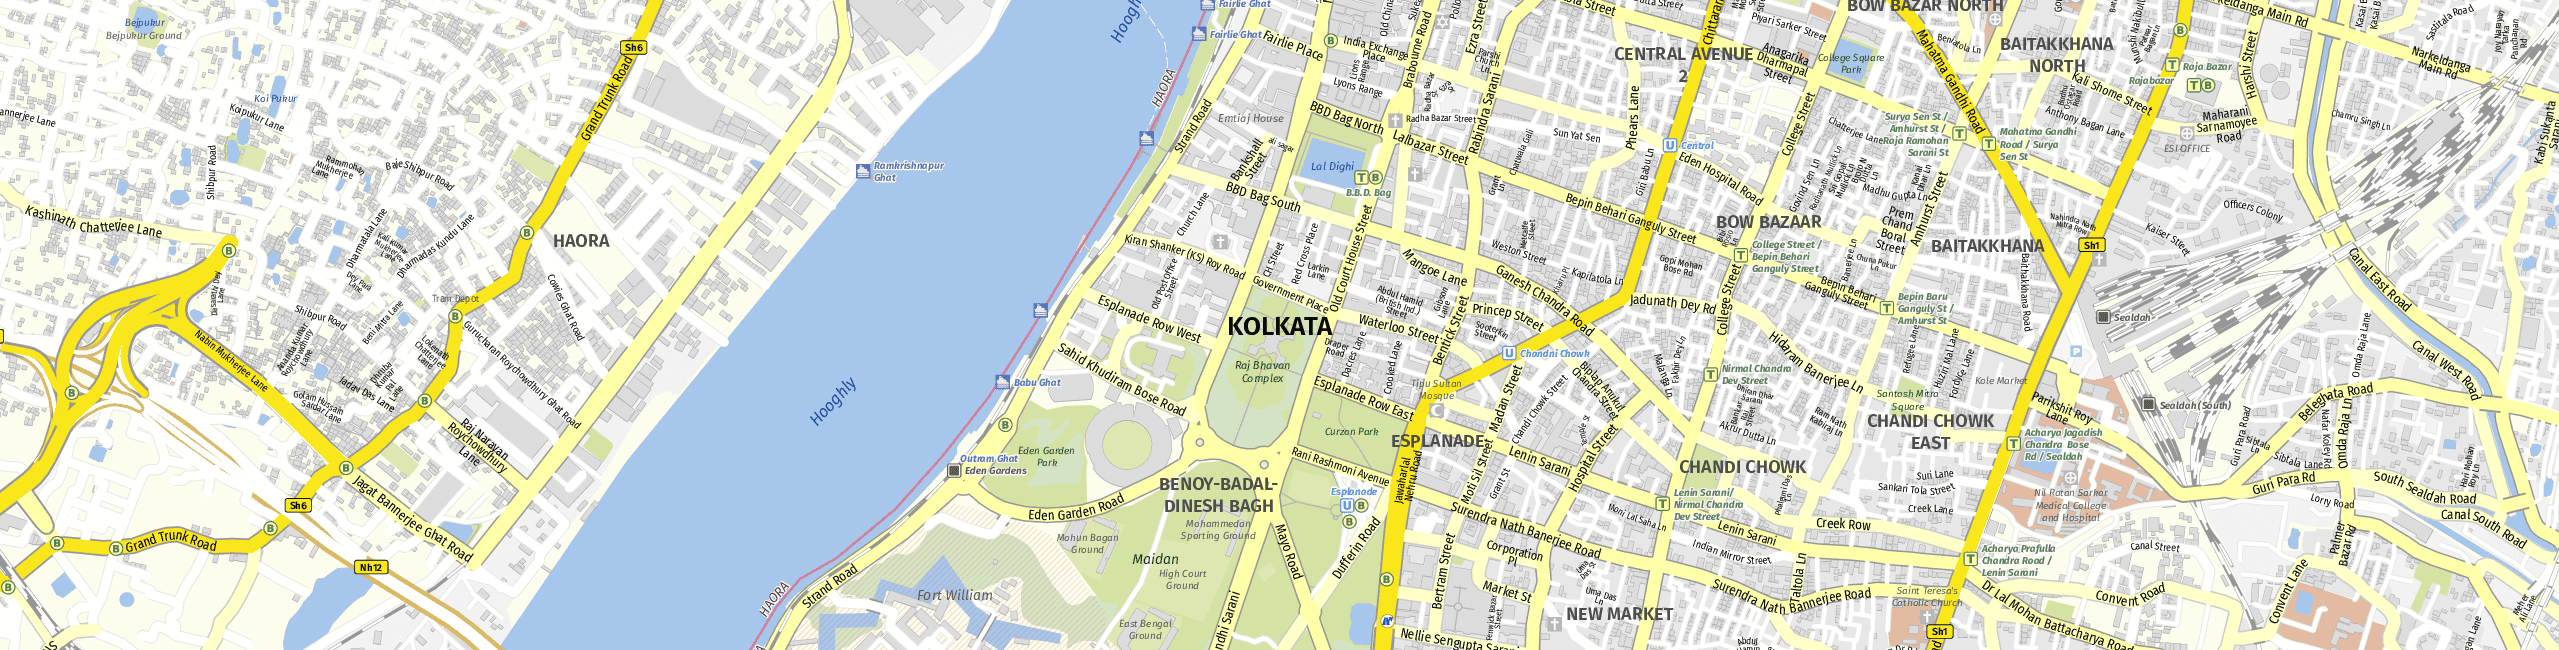 Stadtplan Kalkutta zum Downloaden.